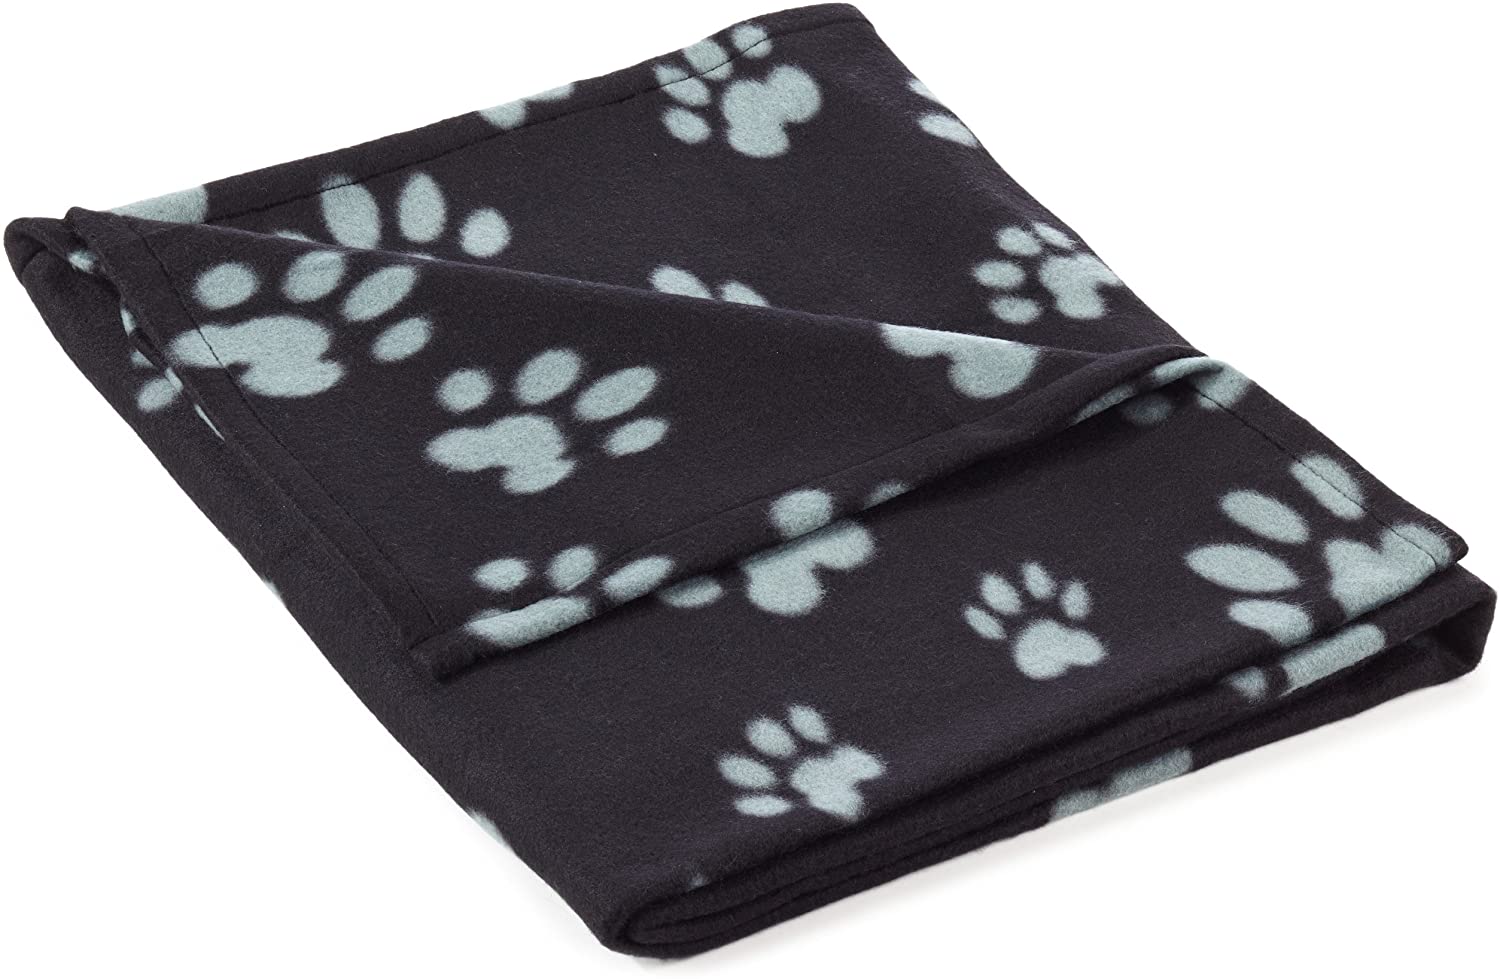  Trixie Manta para Perros Mascotas - Manta Sofa Suave Manta para Mascotas Perros Gatos Cálida Protección Manta Barney 150 x 100 cm Negro Beige 